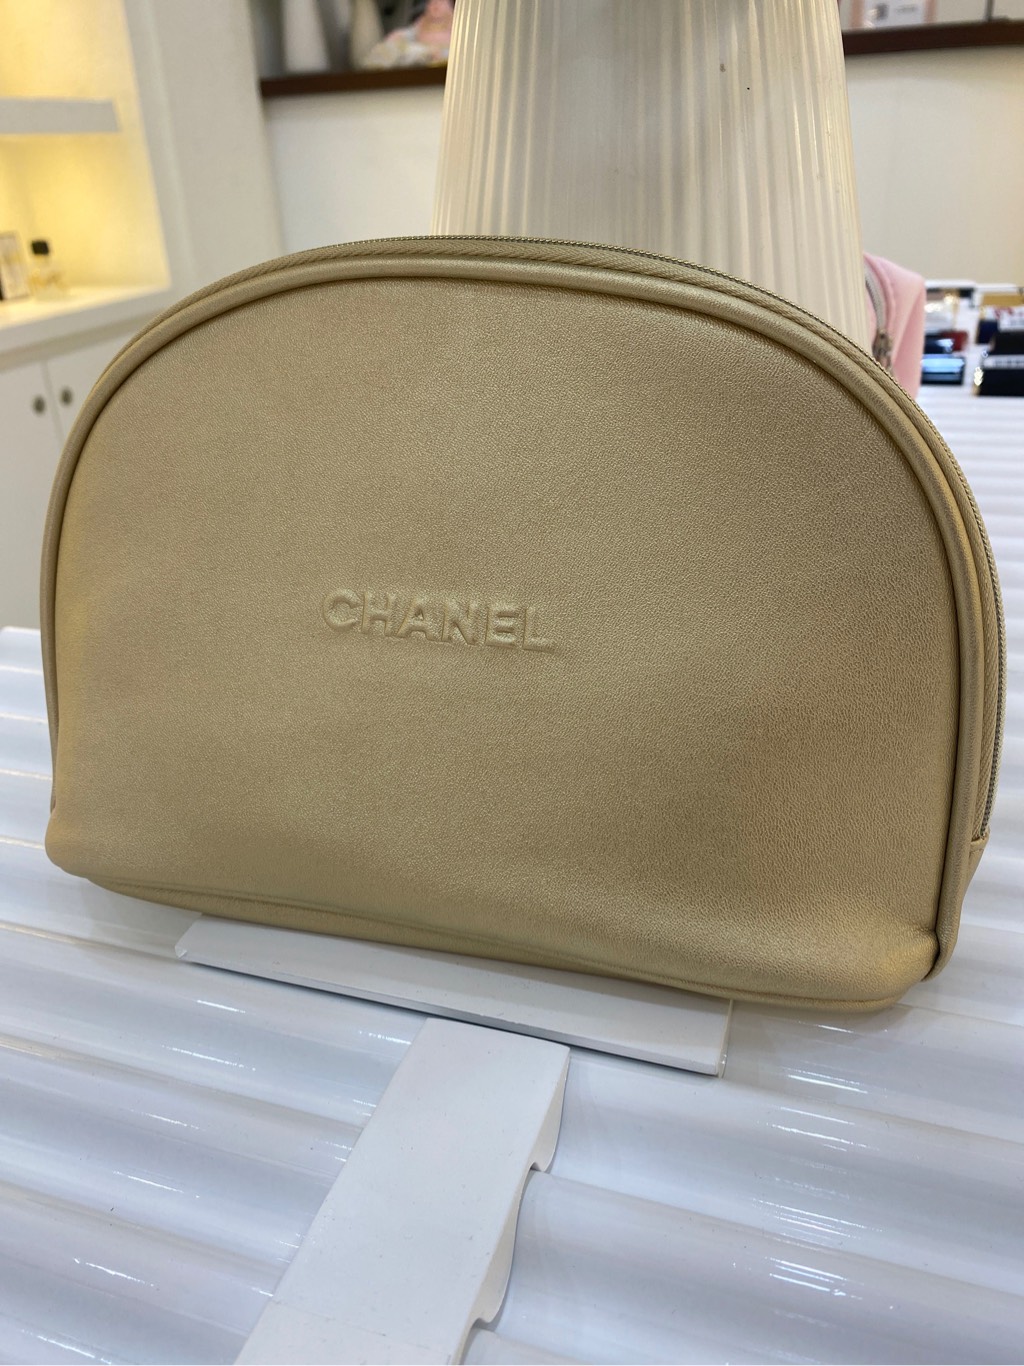 Chanel Makeup Cosmetic Neoprene Black Bag Beauty VIP  Depop